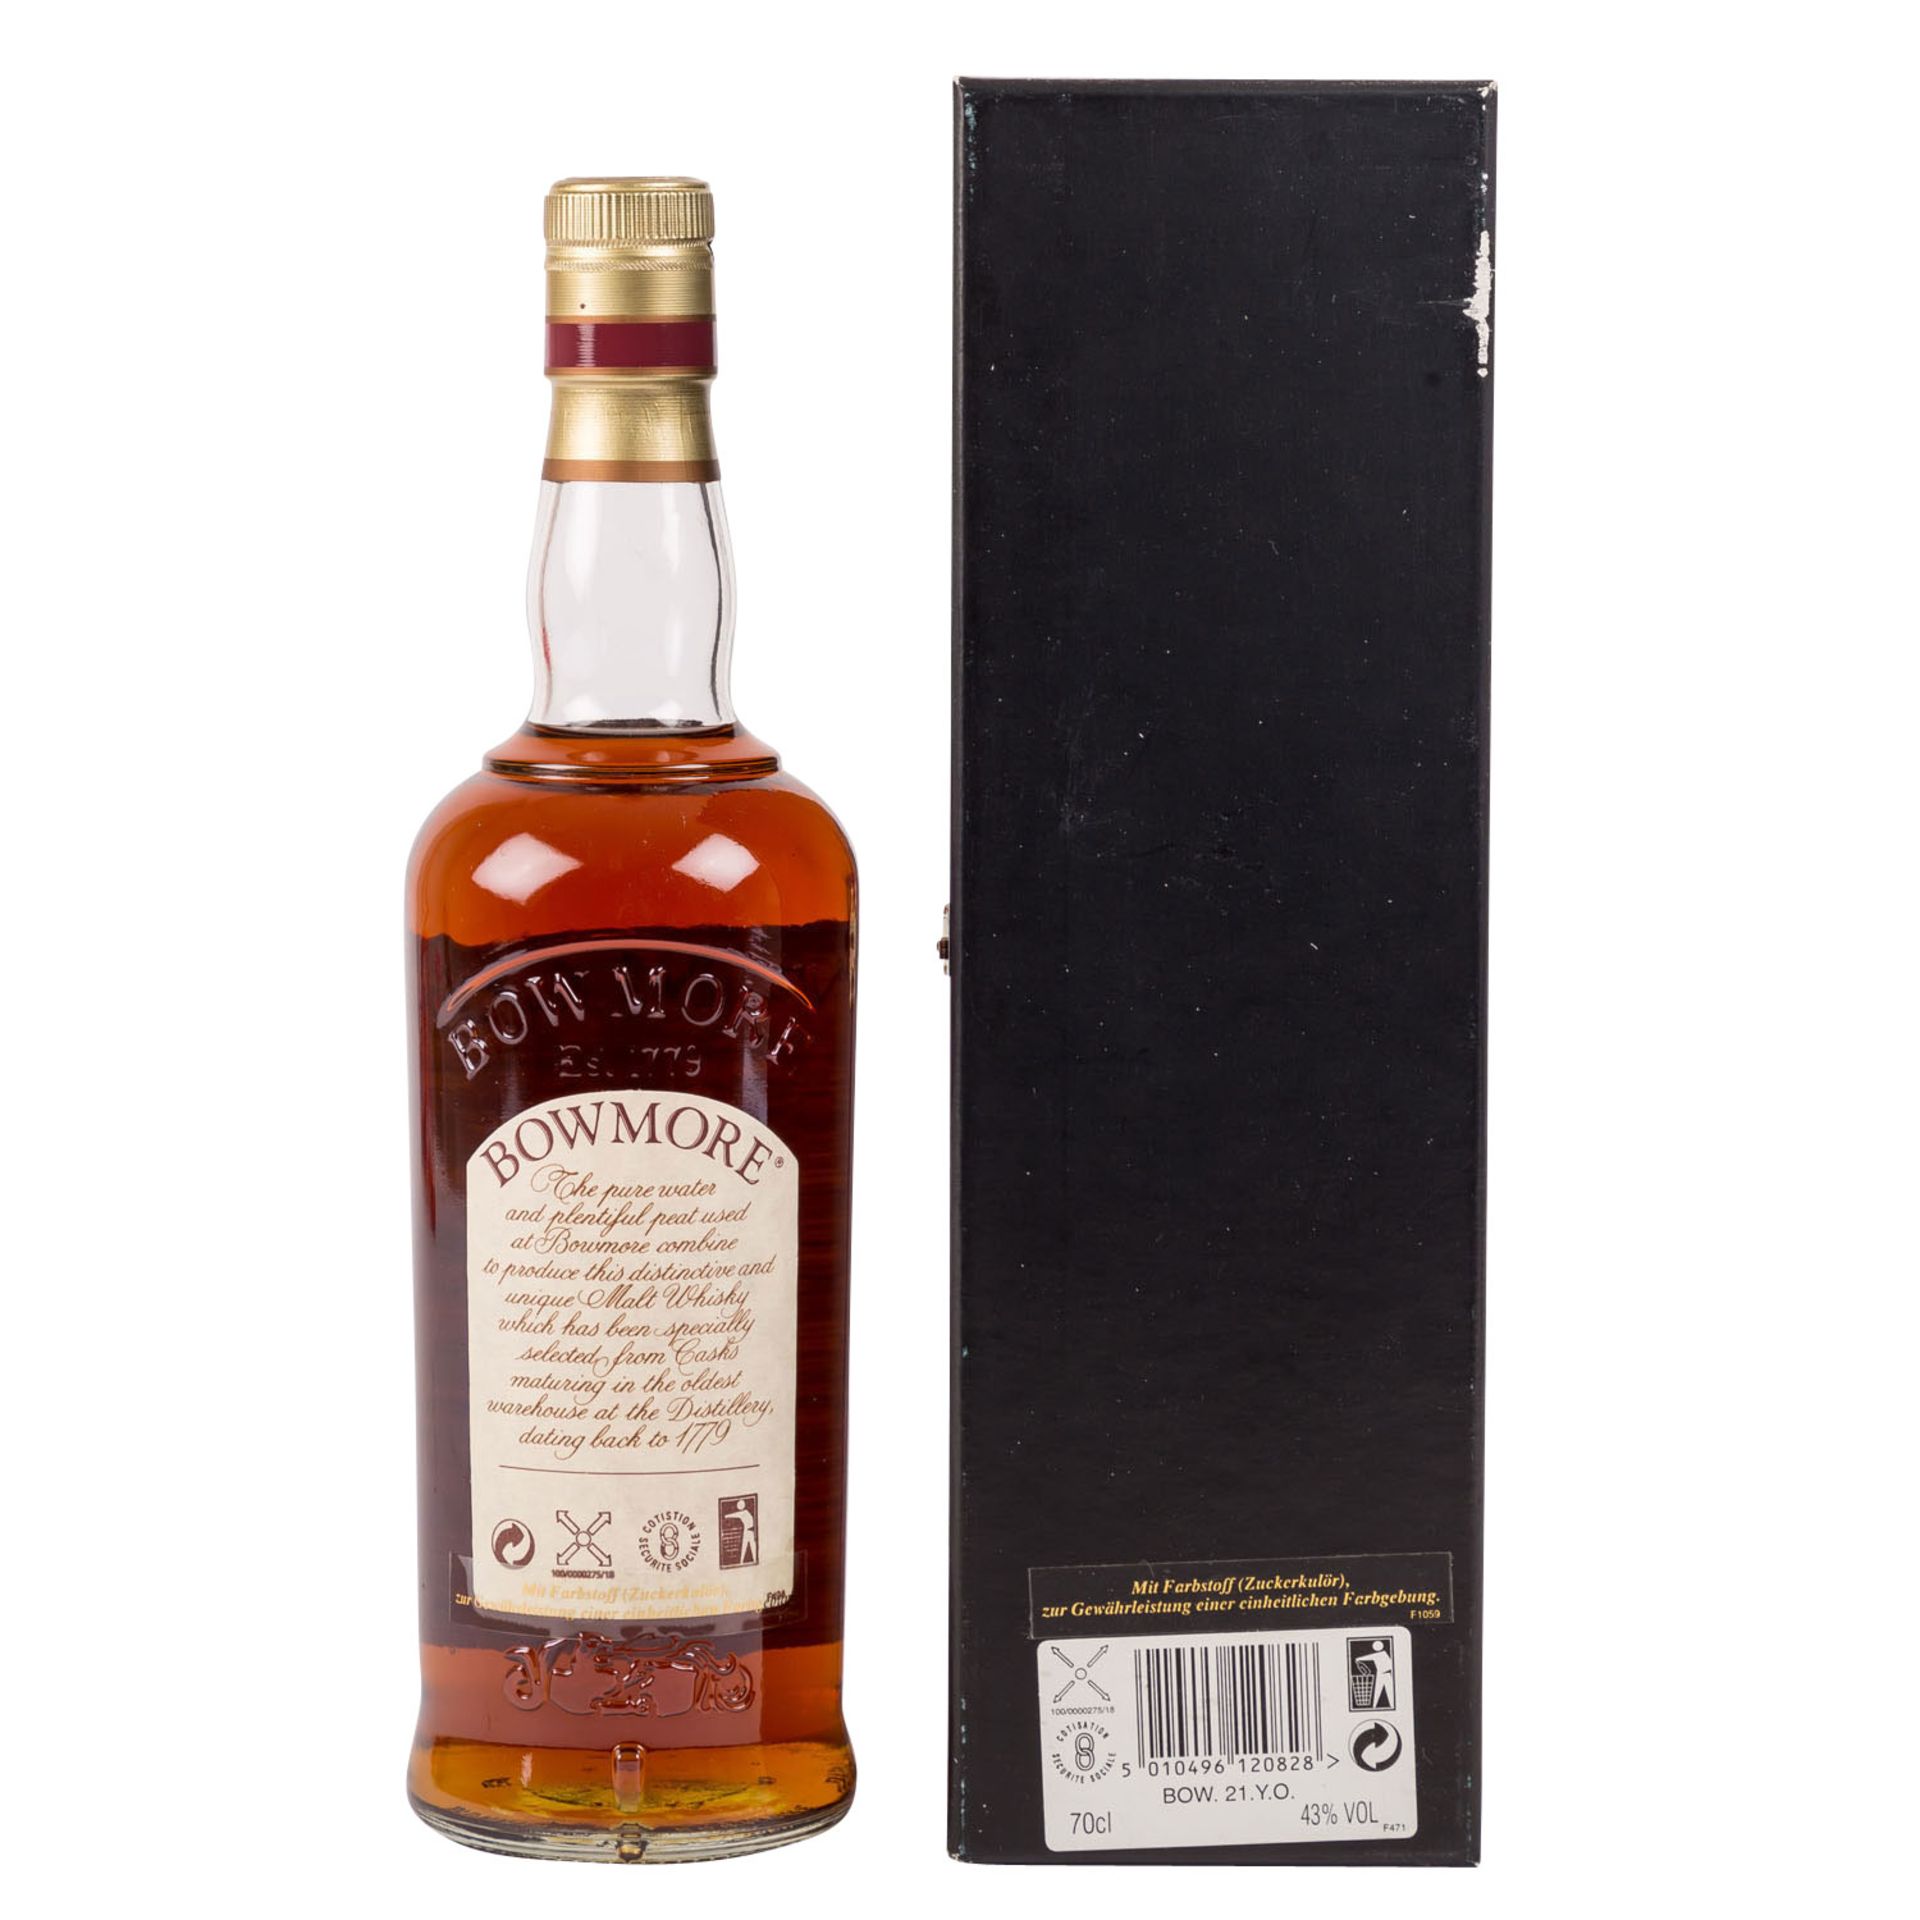 BOWMORE Single Malt Scotch Whisky, 21 years - Image 2 of 3